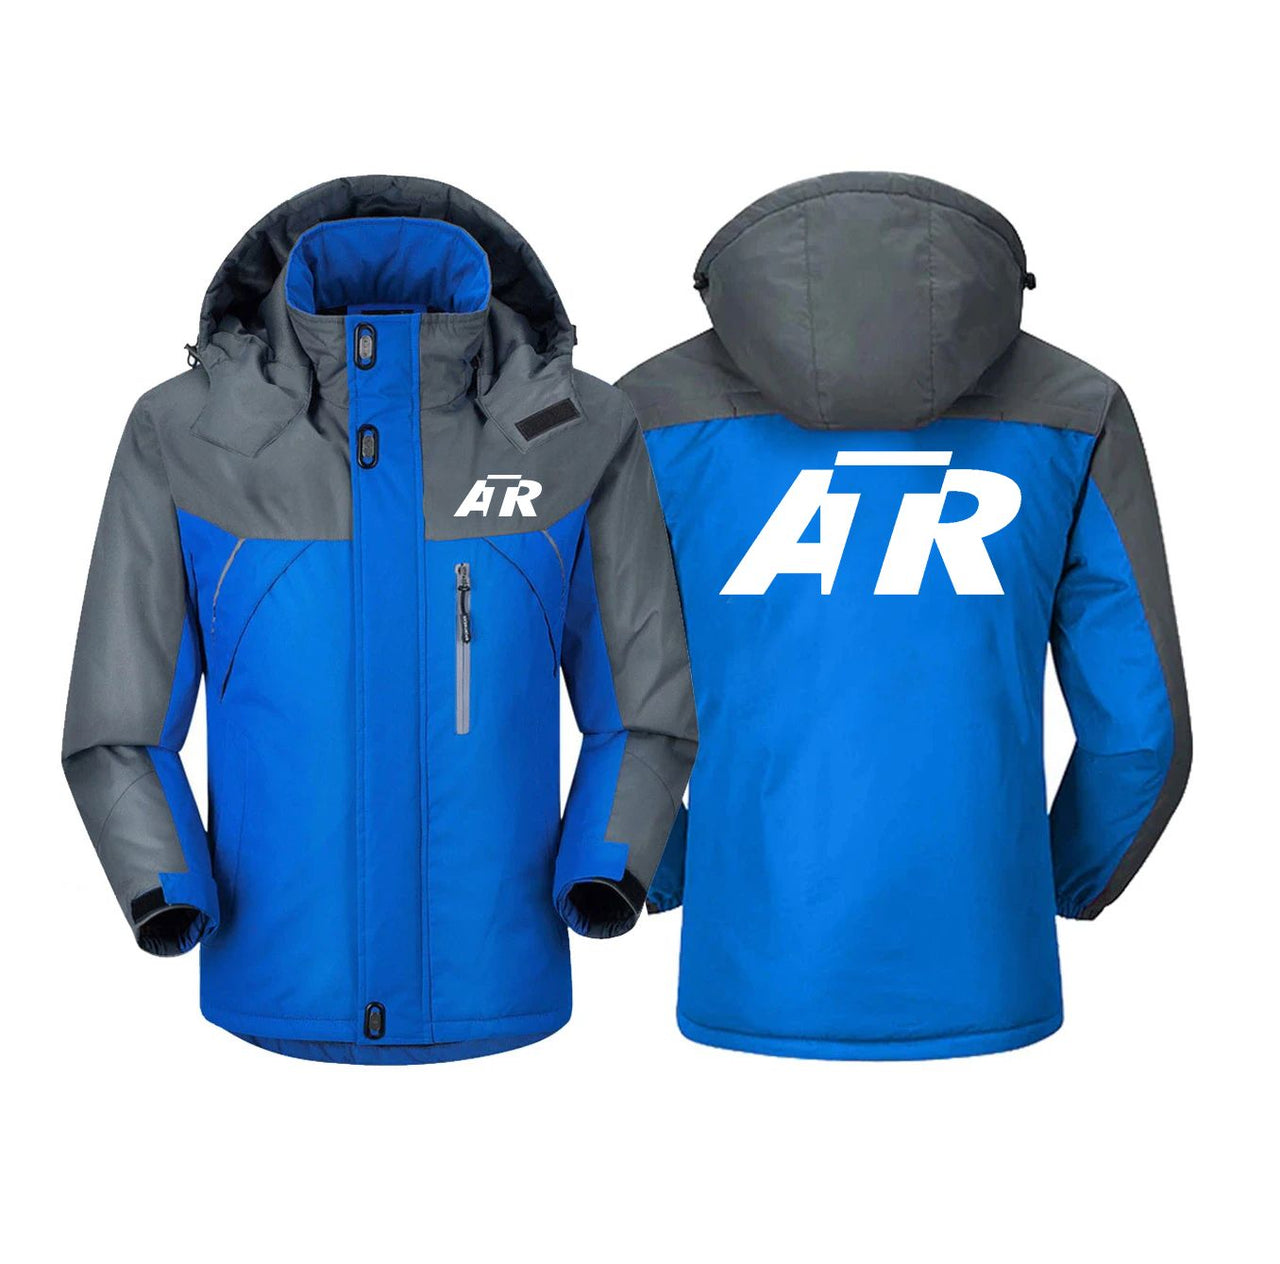 ATR & Text Designed Thick Winter Jackets